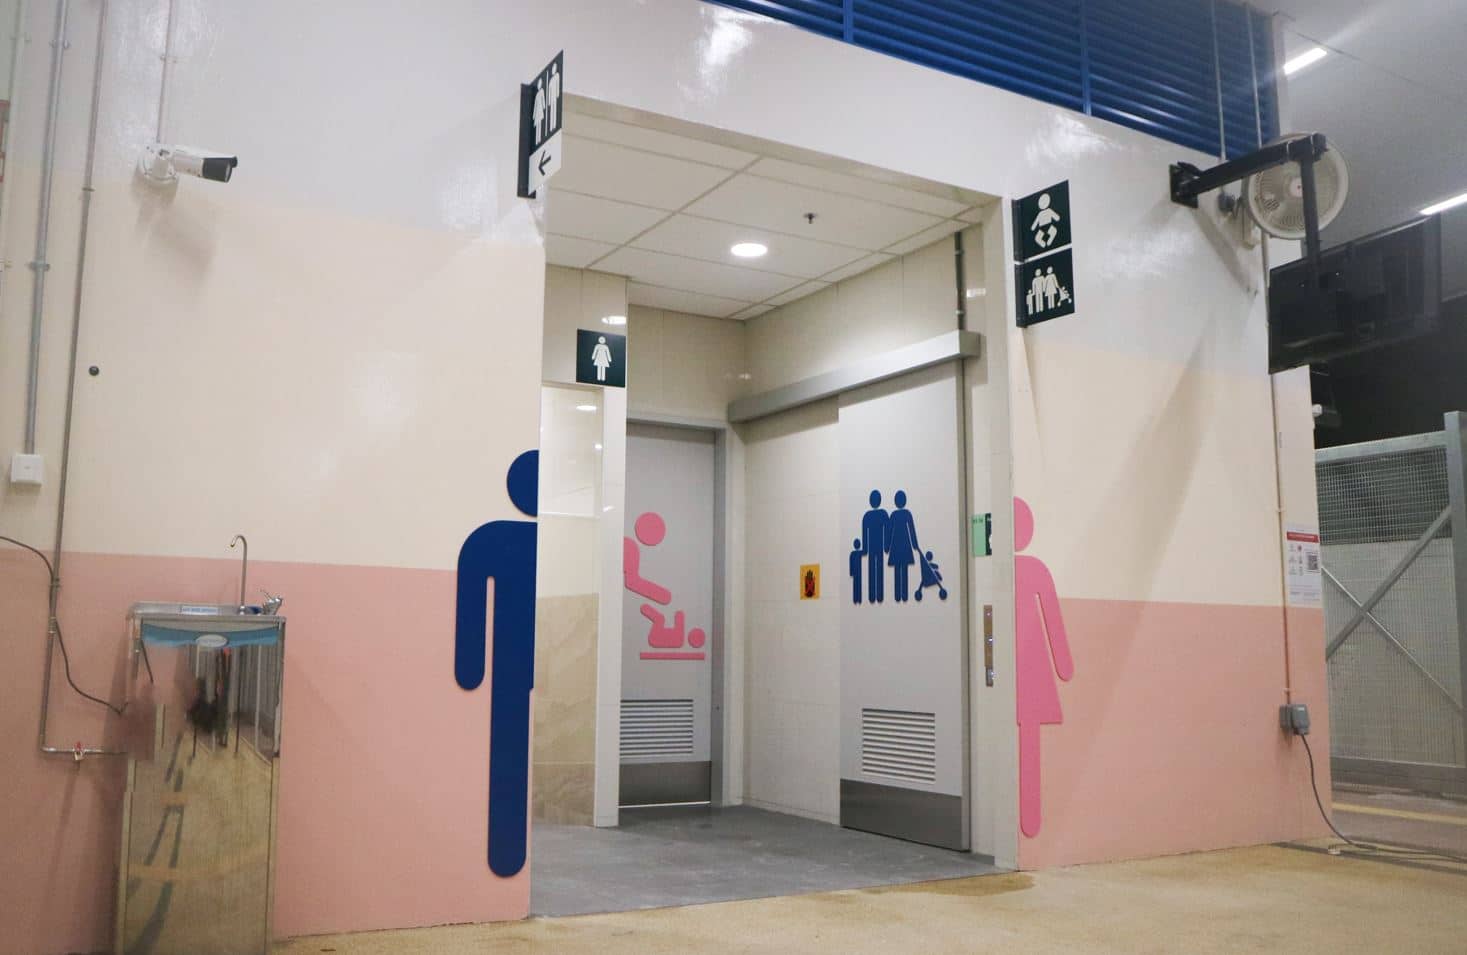 Pasir Ris Bus Interchange Restroom